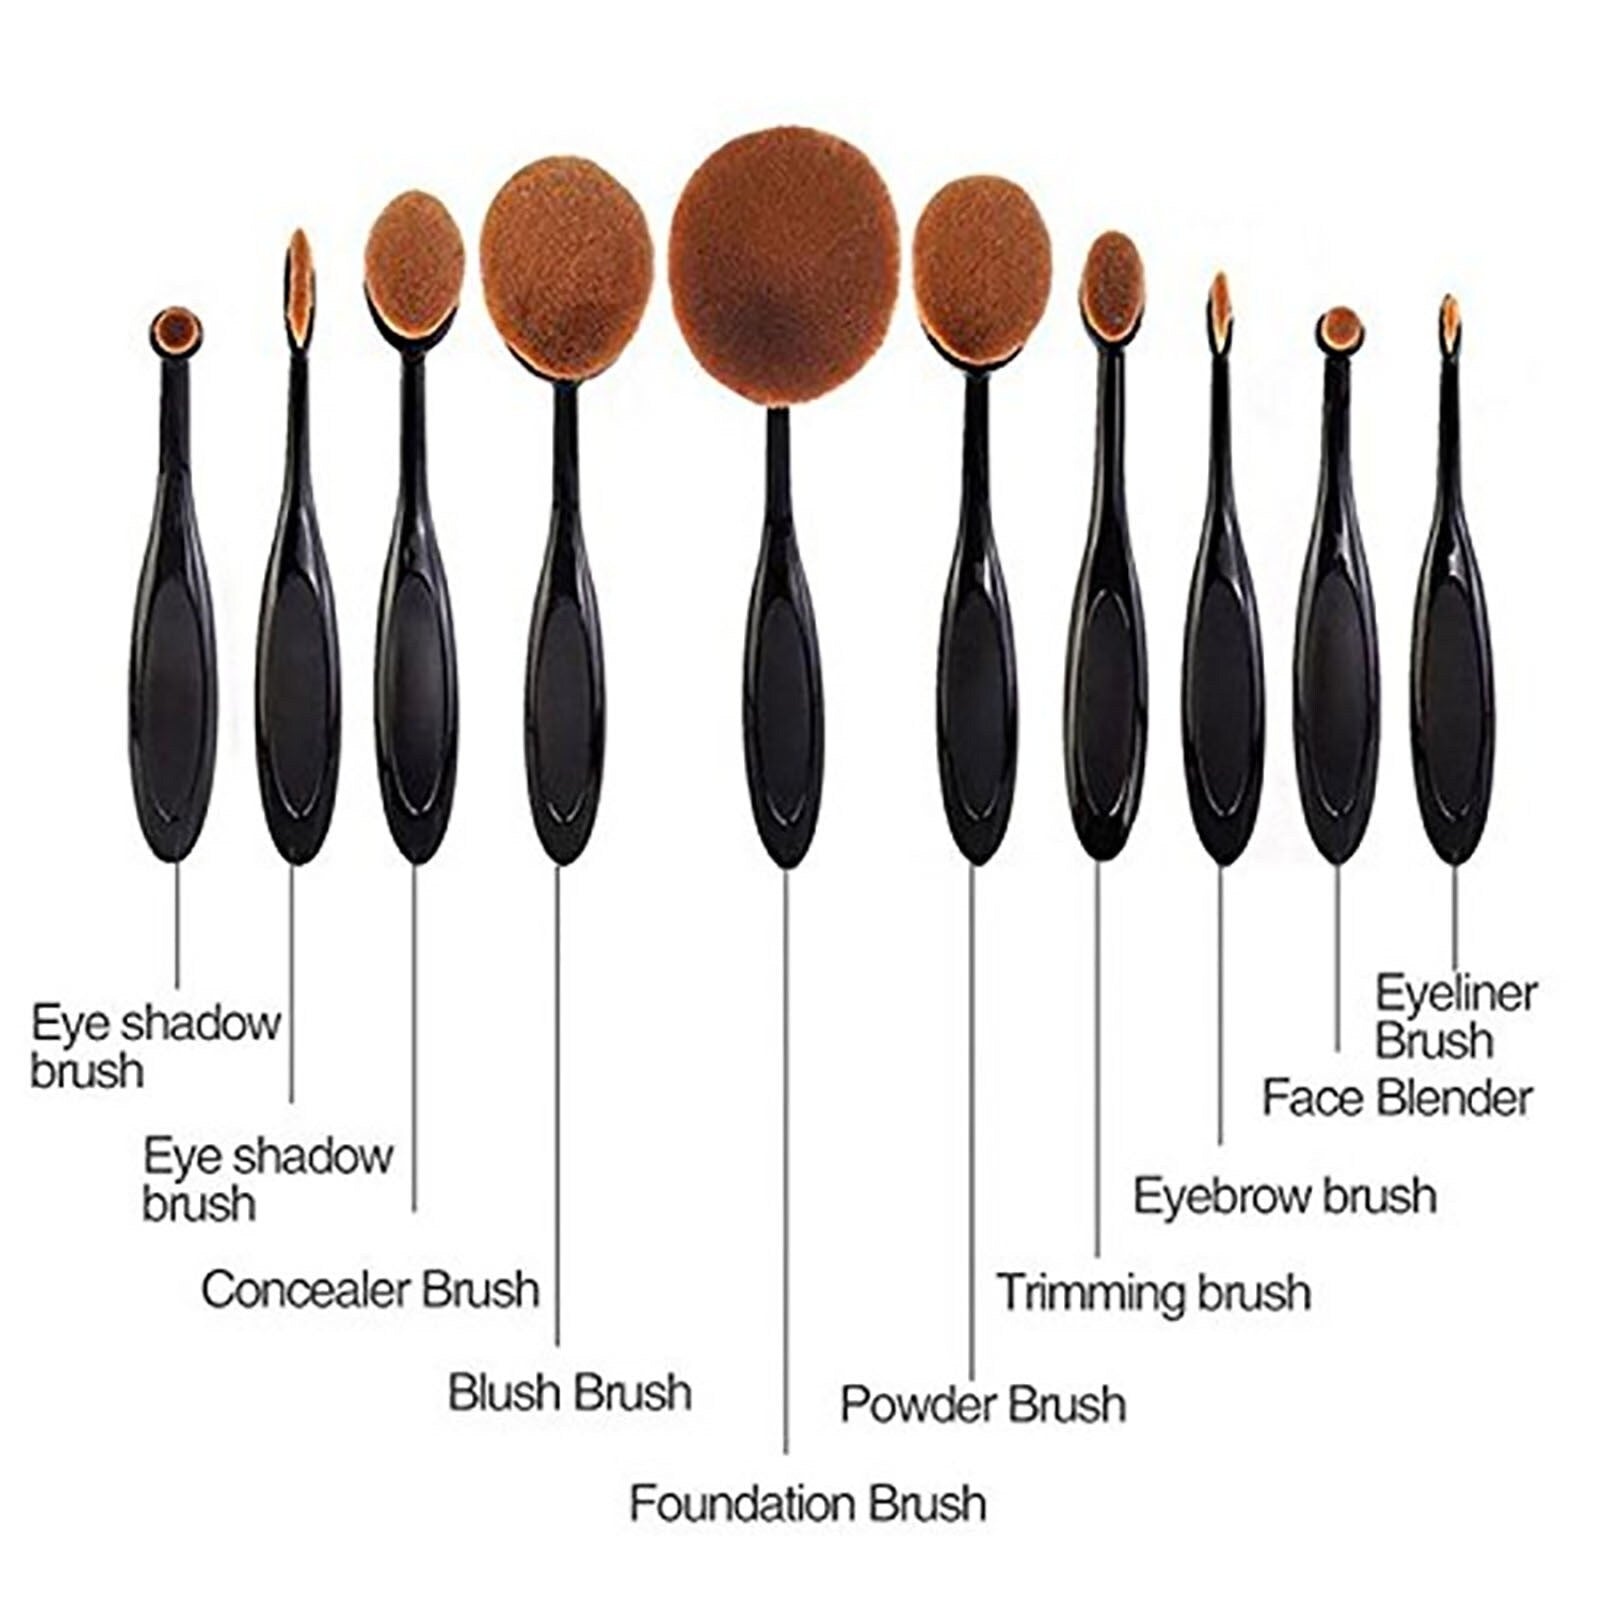 Oval blush & powder brushes